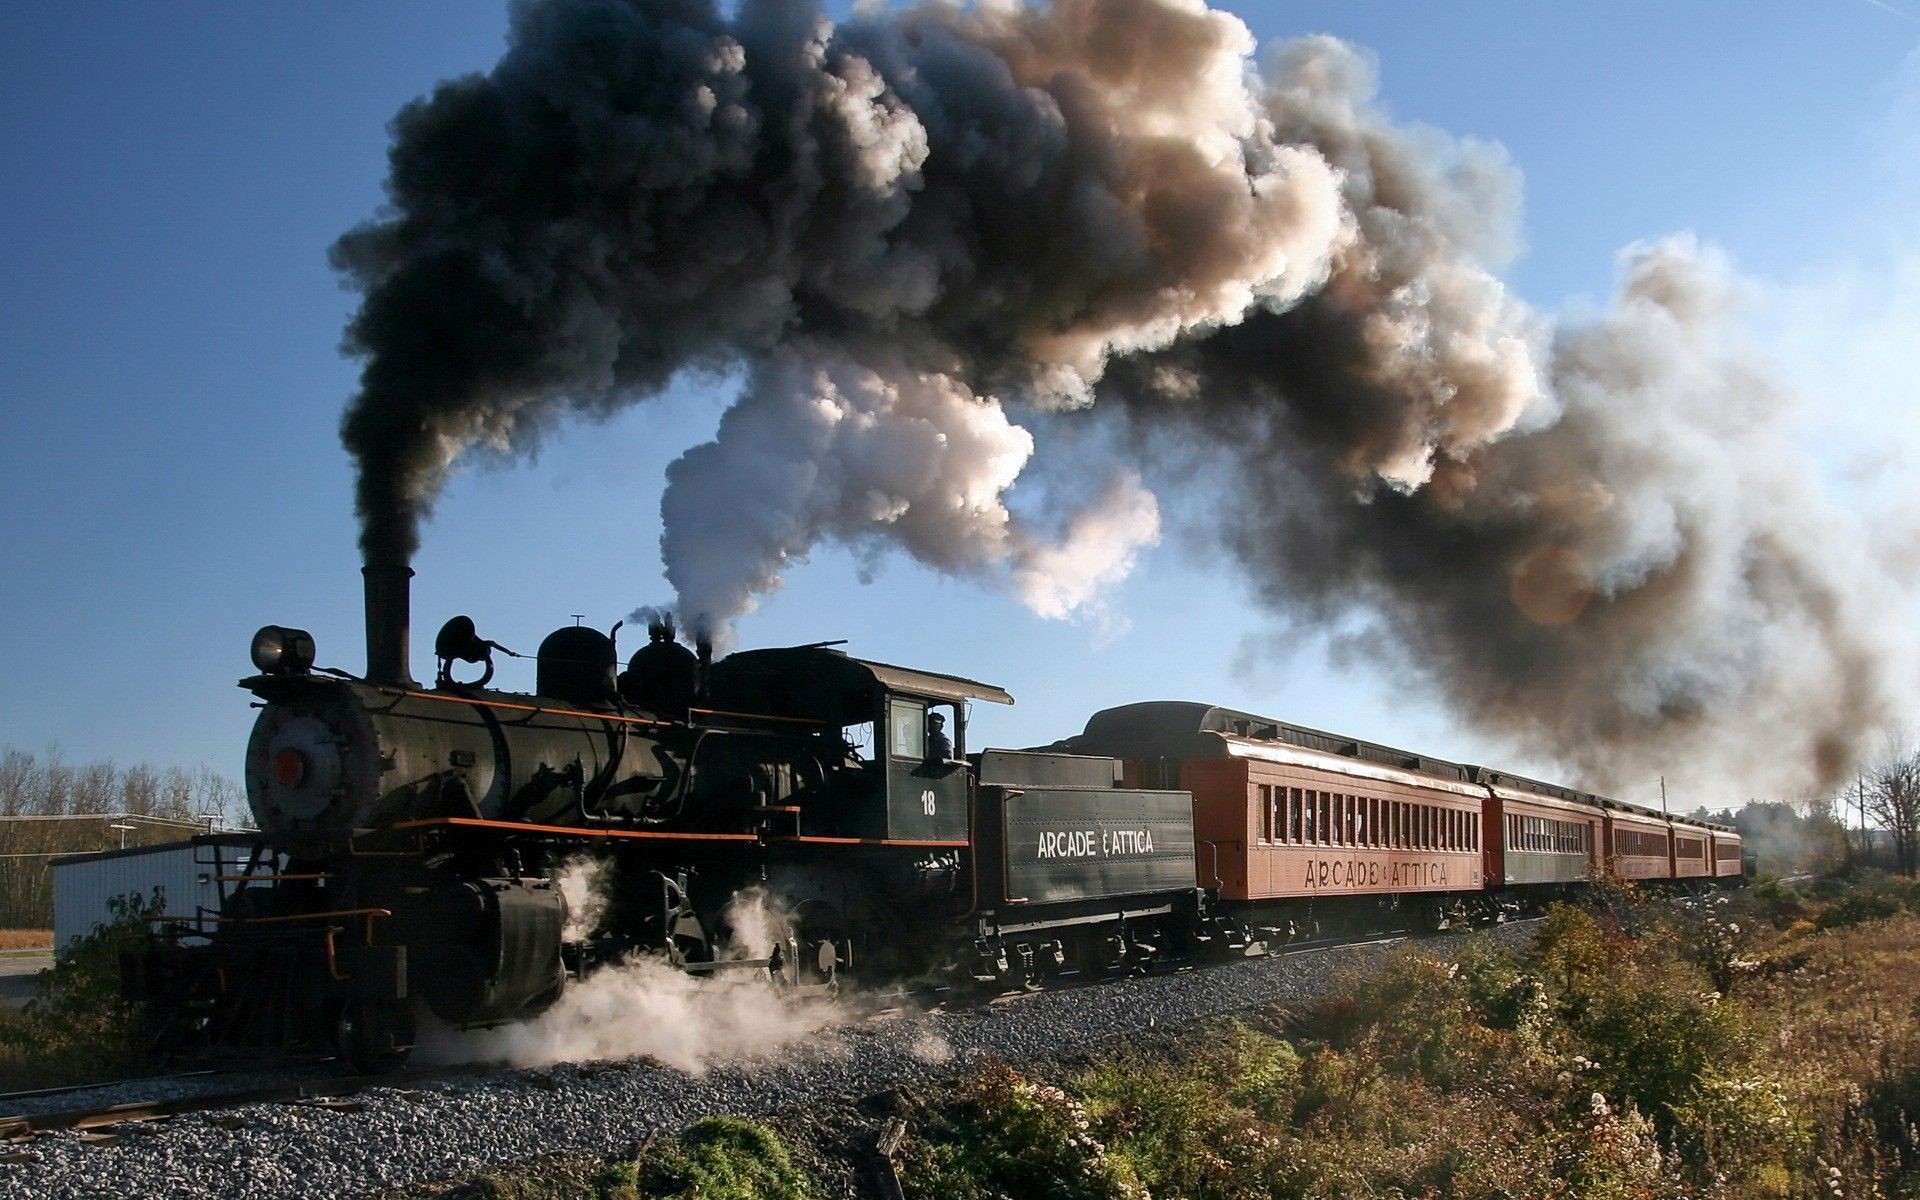 Railway Train Vehicle Steam Locomotive Smoke Trees Plants New York State USA Men Rail Yard 1920x1200